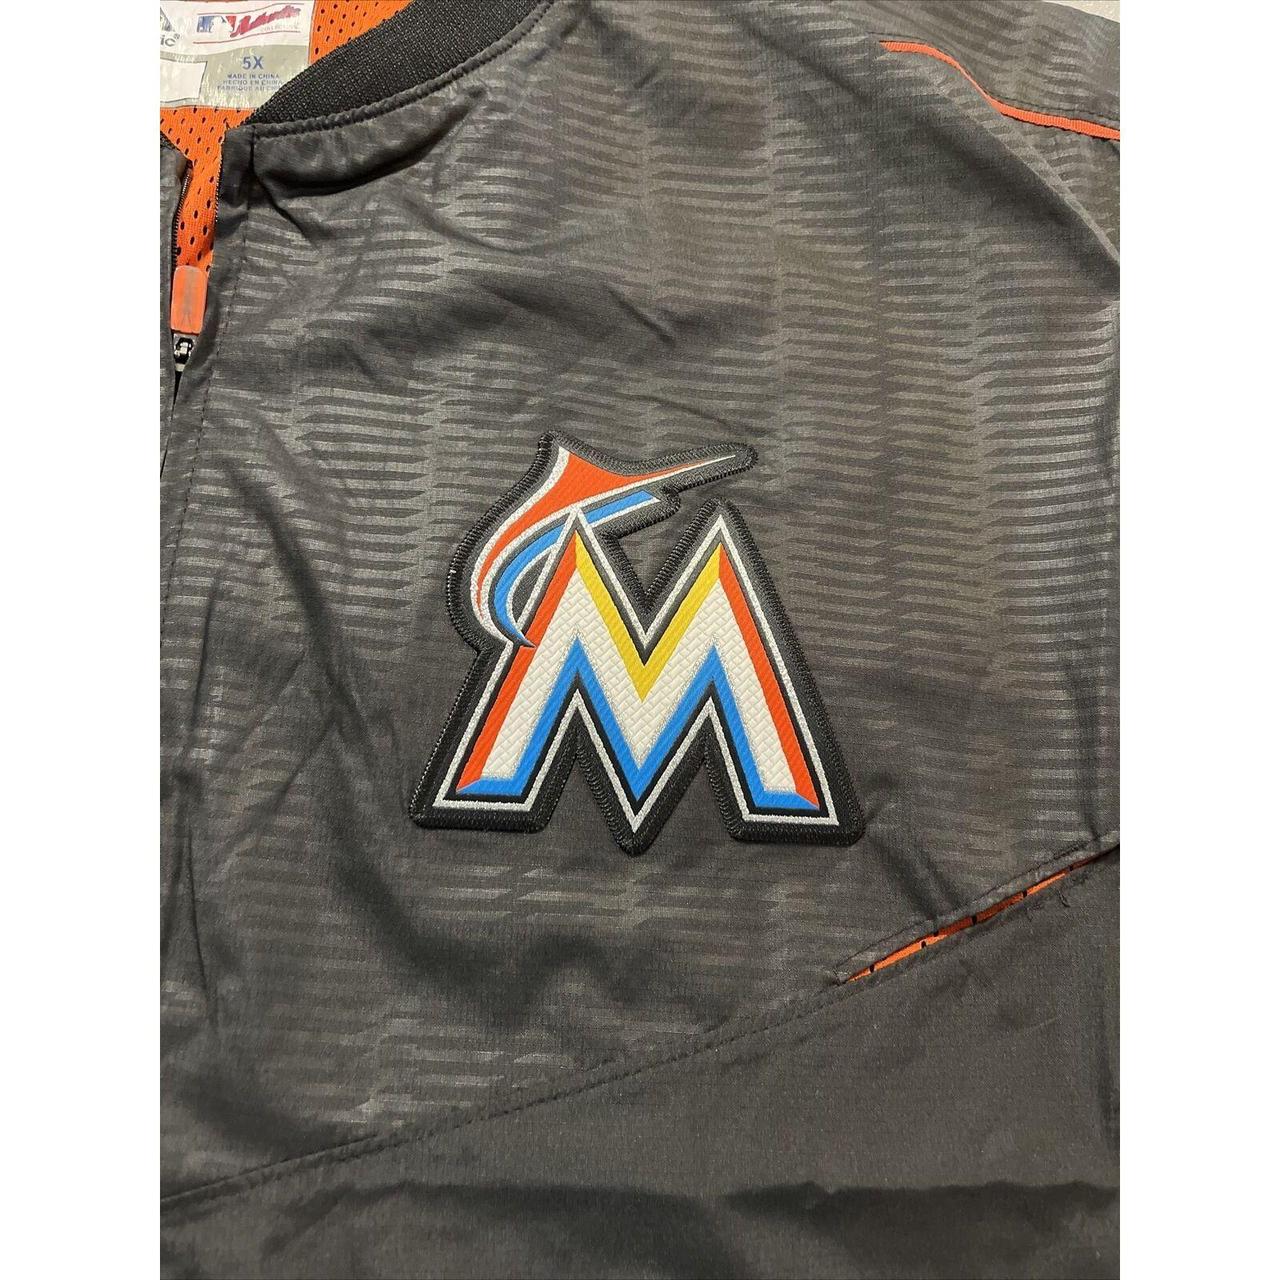 Majestic Athletic MLB Miami Marlins Black Cool Base Jersey - MLB